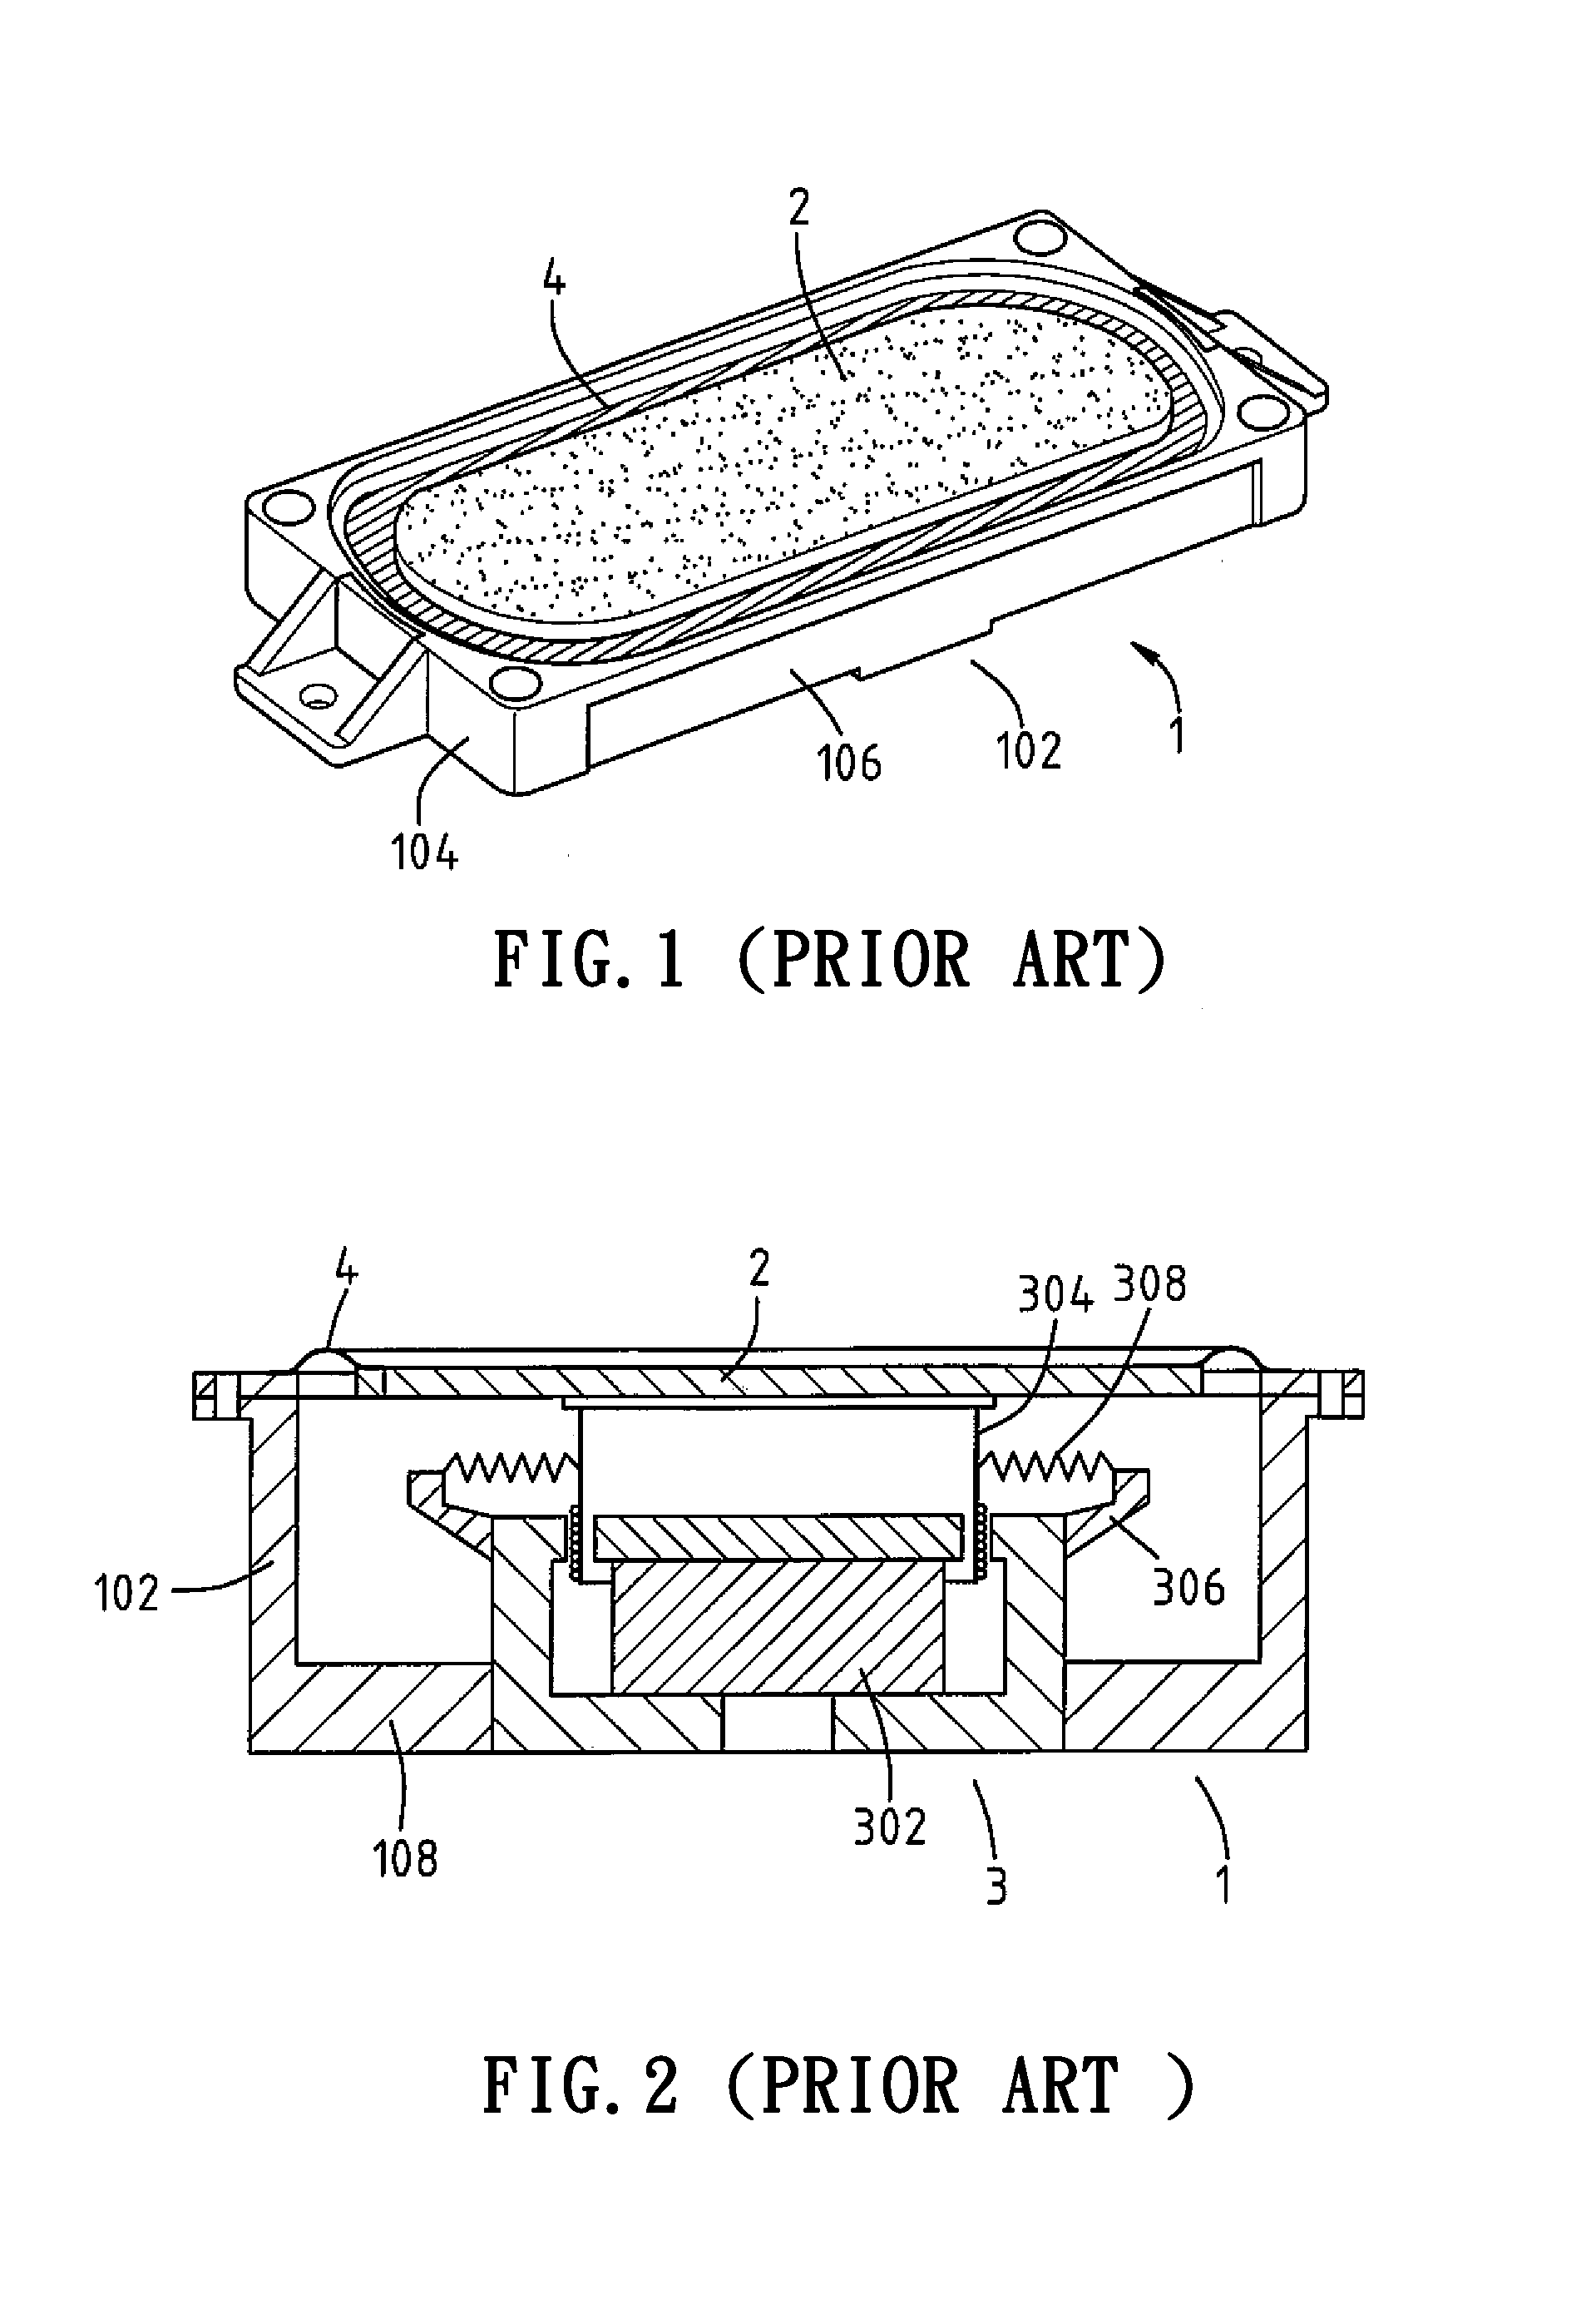 Moving-coil planar speaker